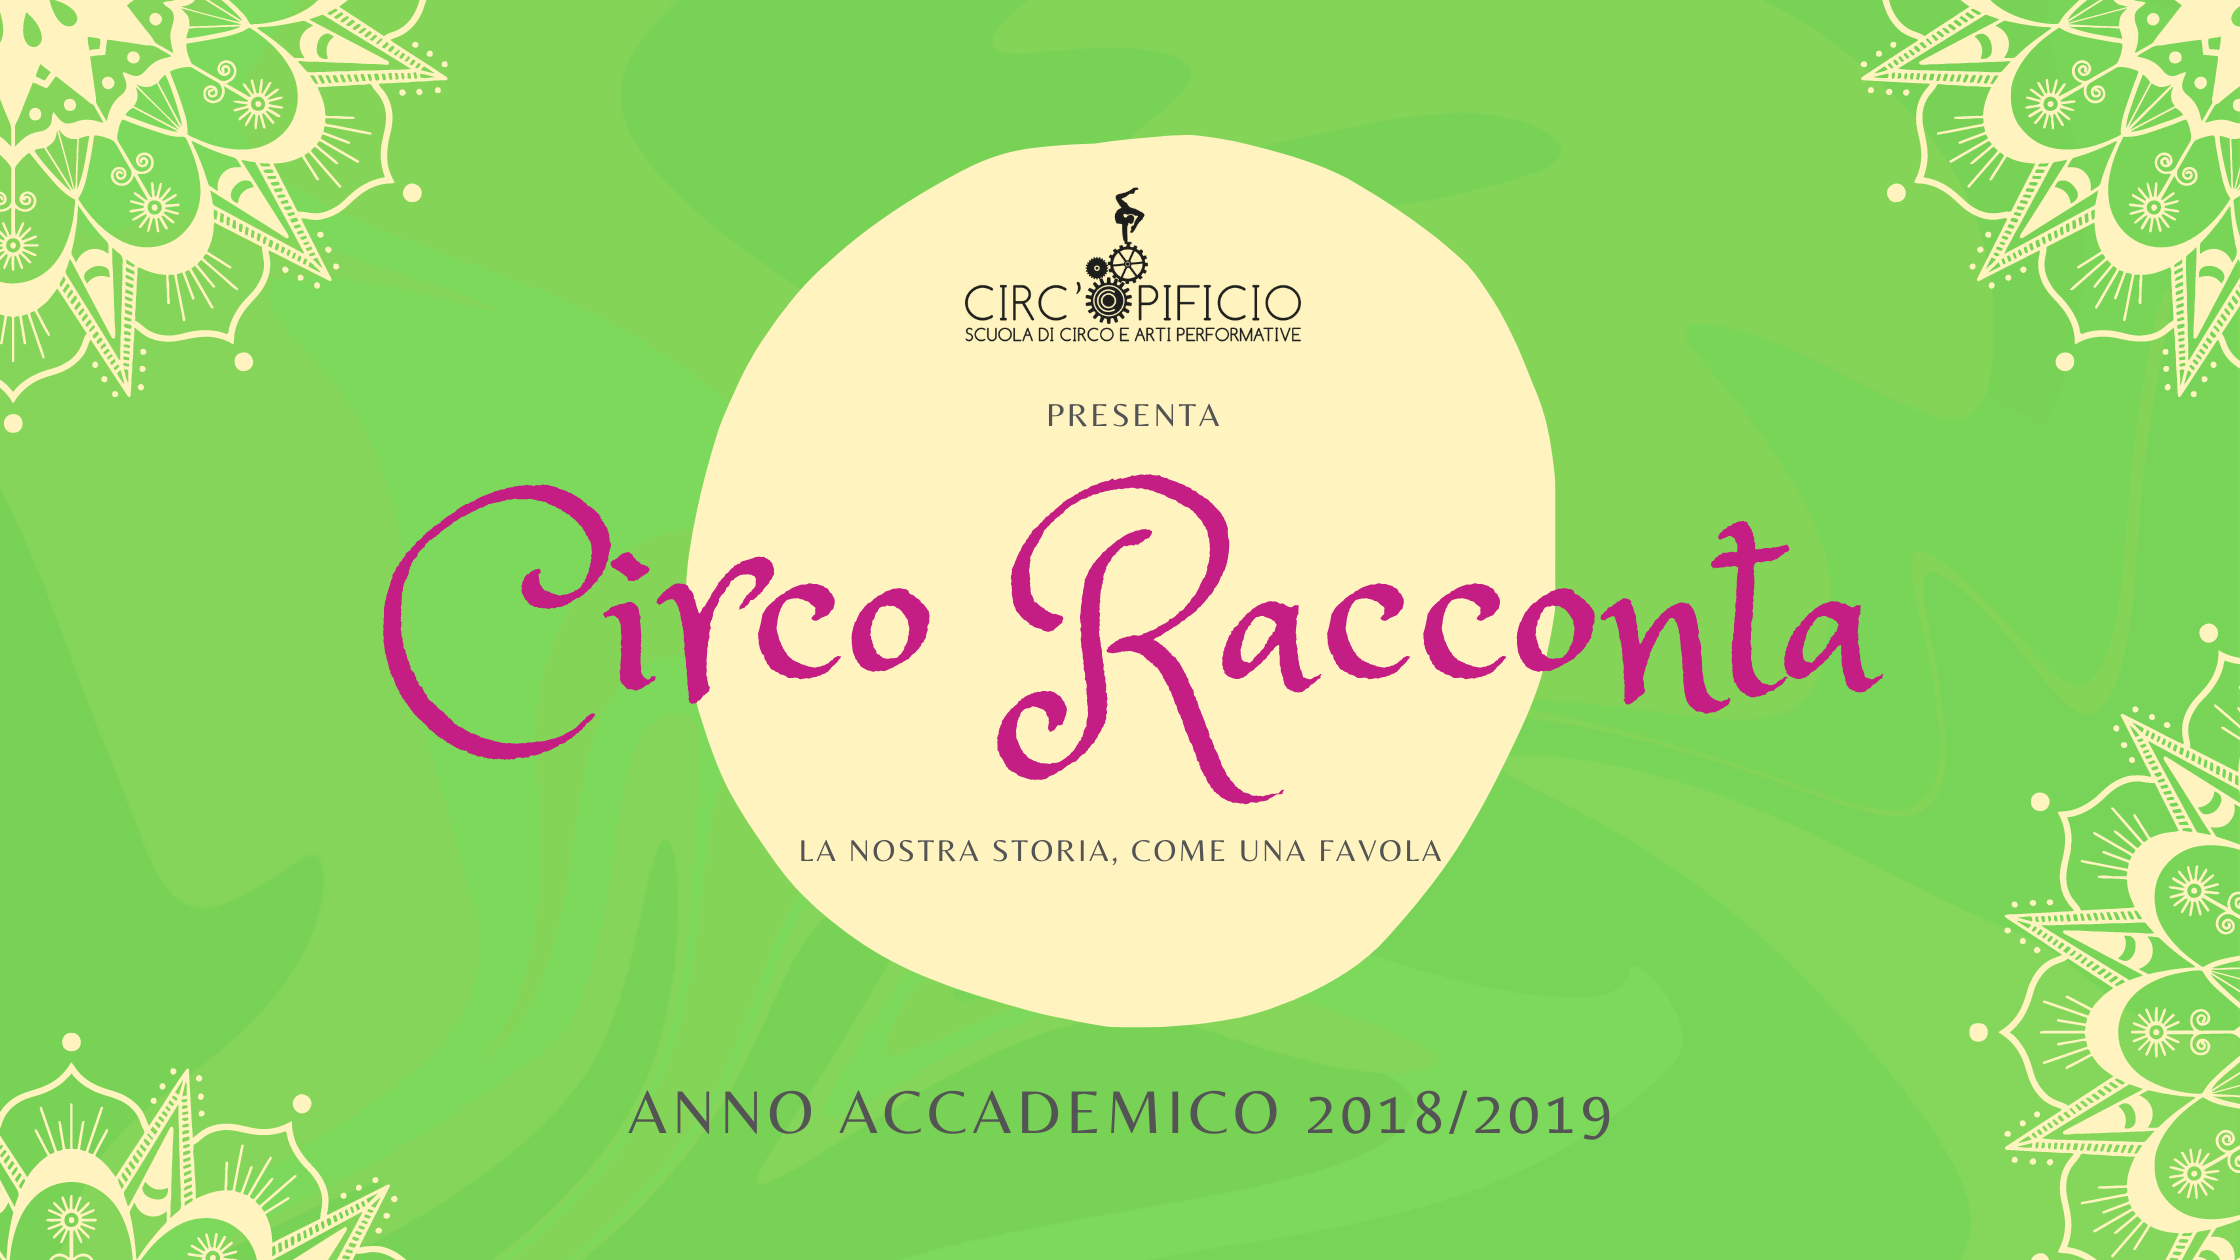 http://www.circopificio.it/wp-content/uploads/2020/12/Circo-Racconta-4.png